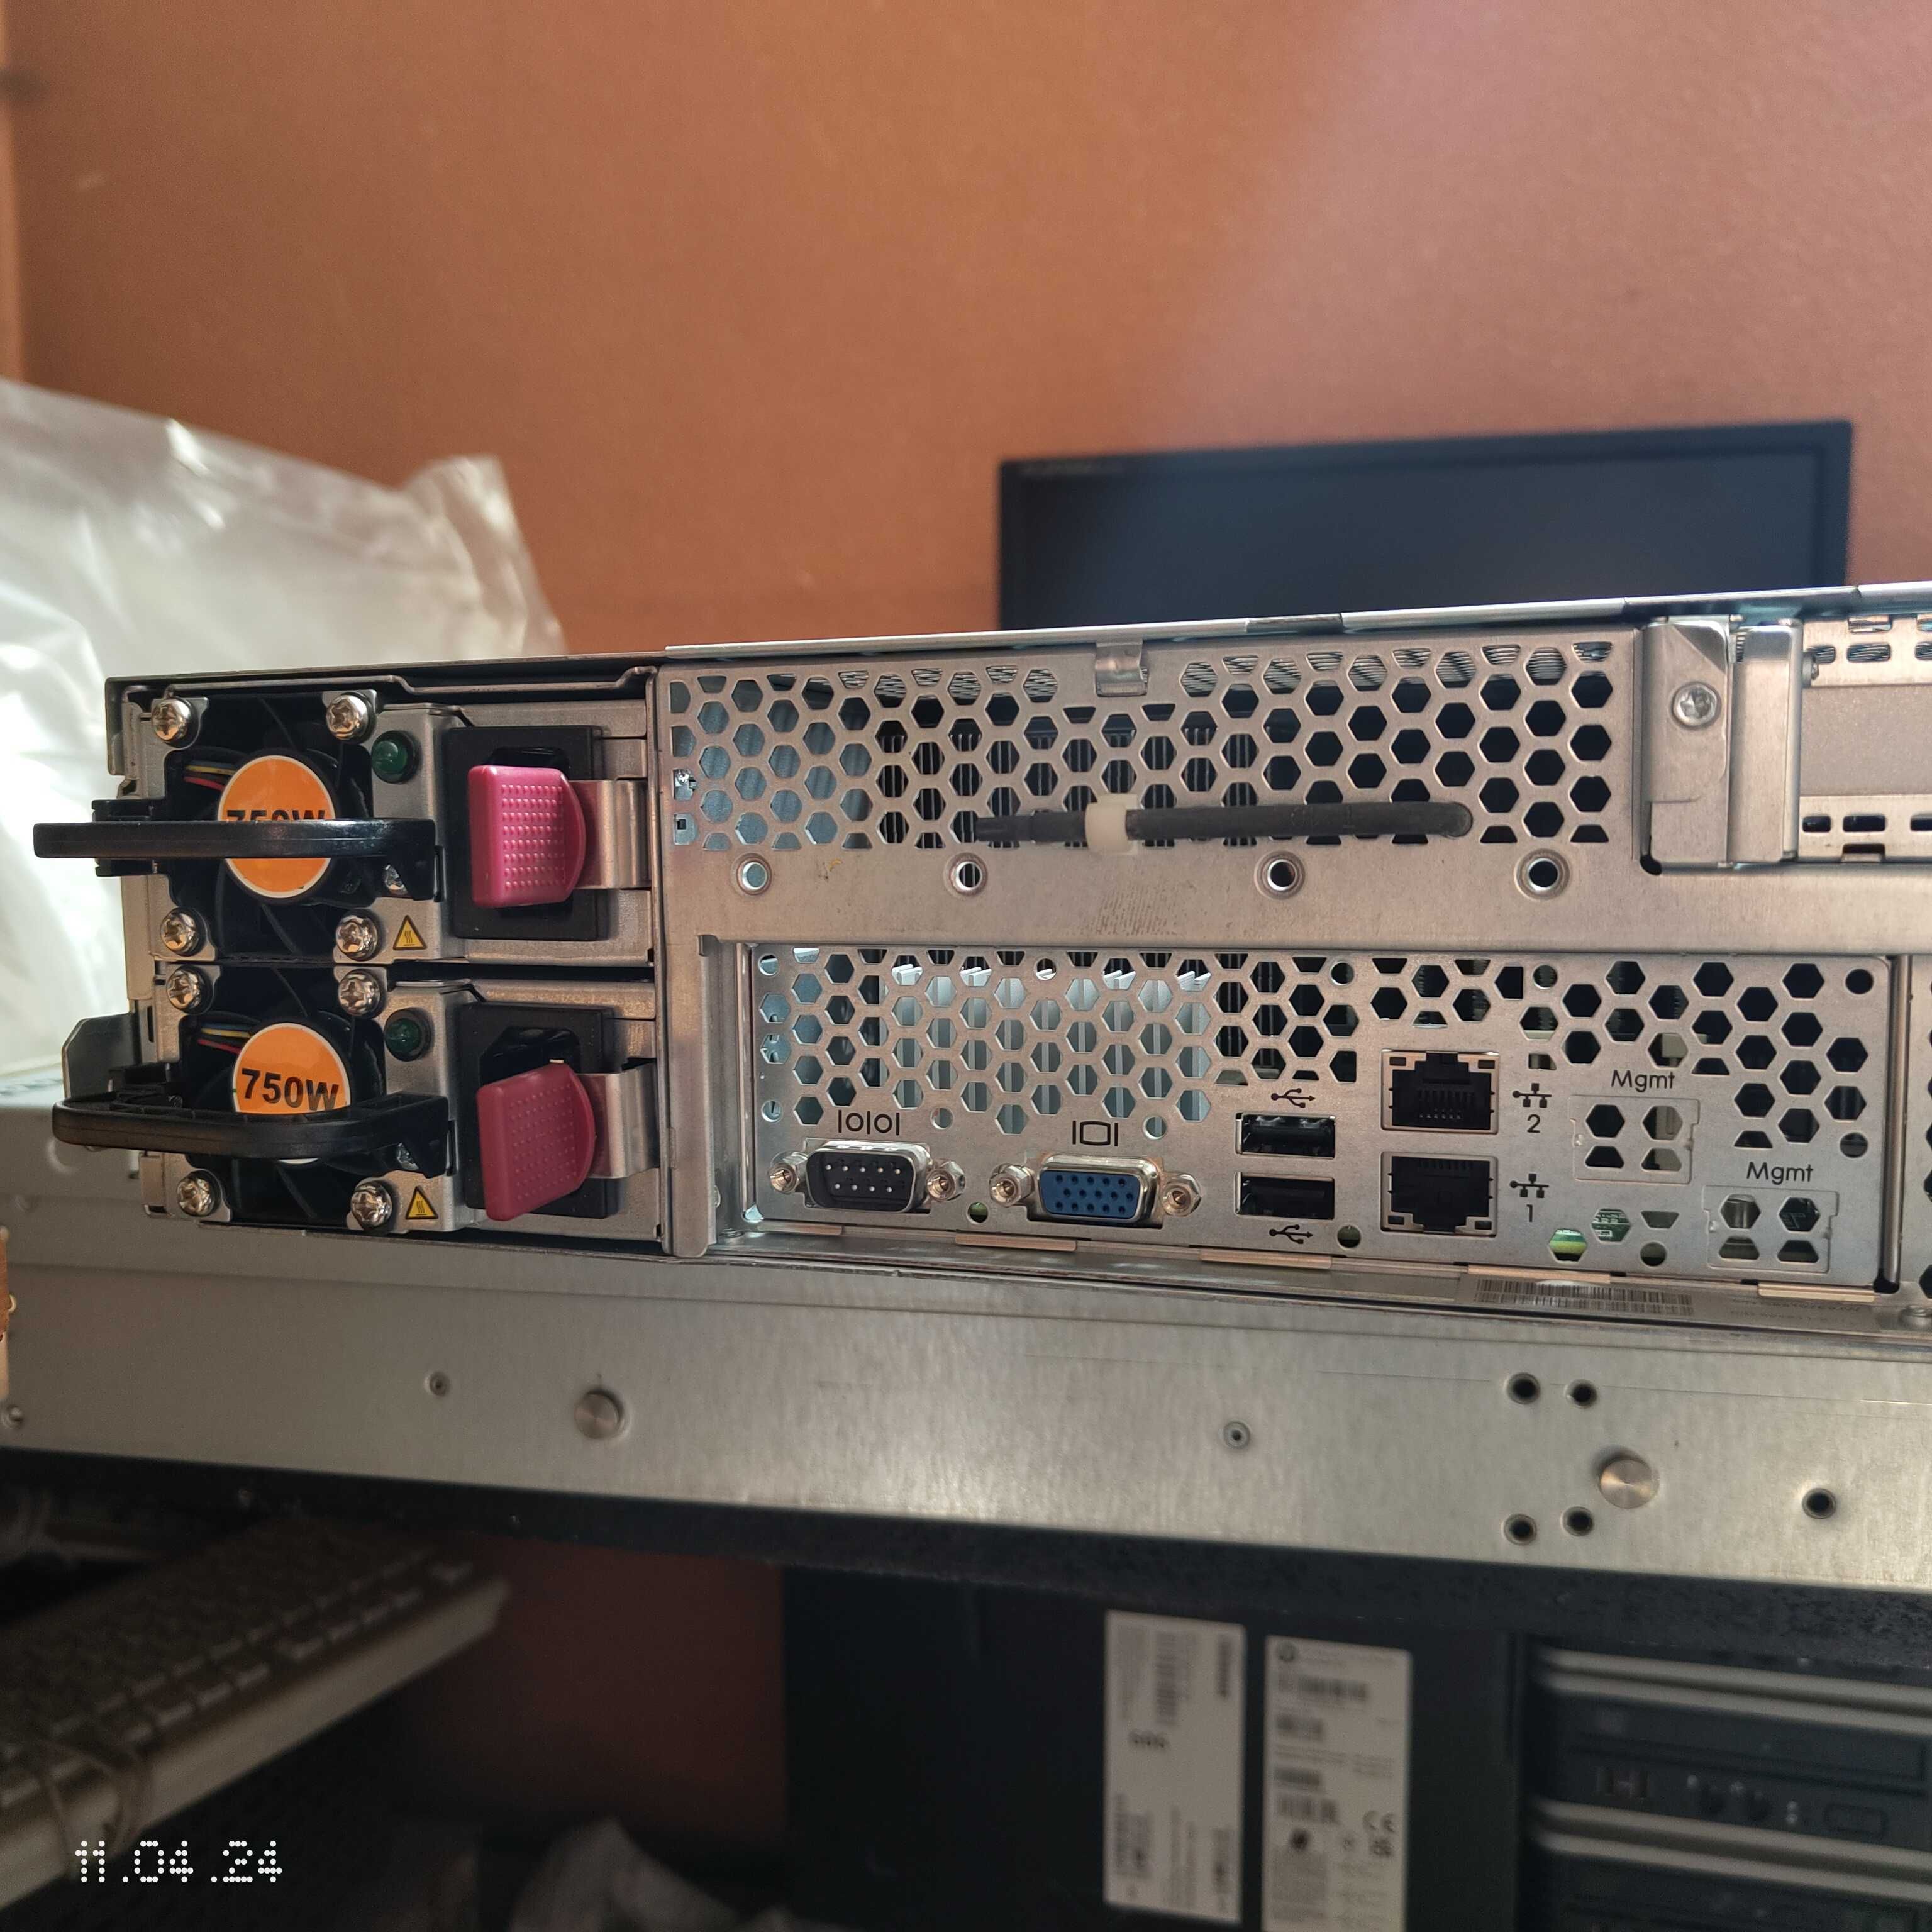 HP Proliant DL180 G6 2U Rack Server